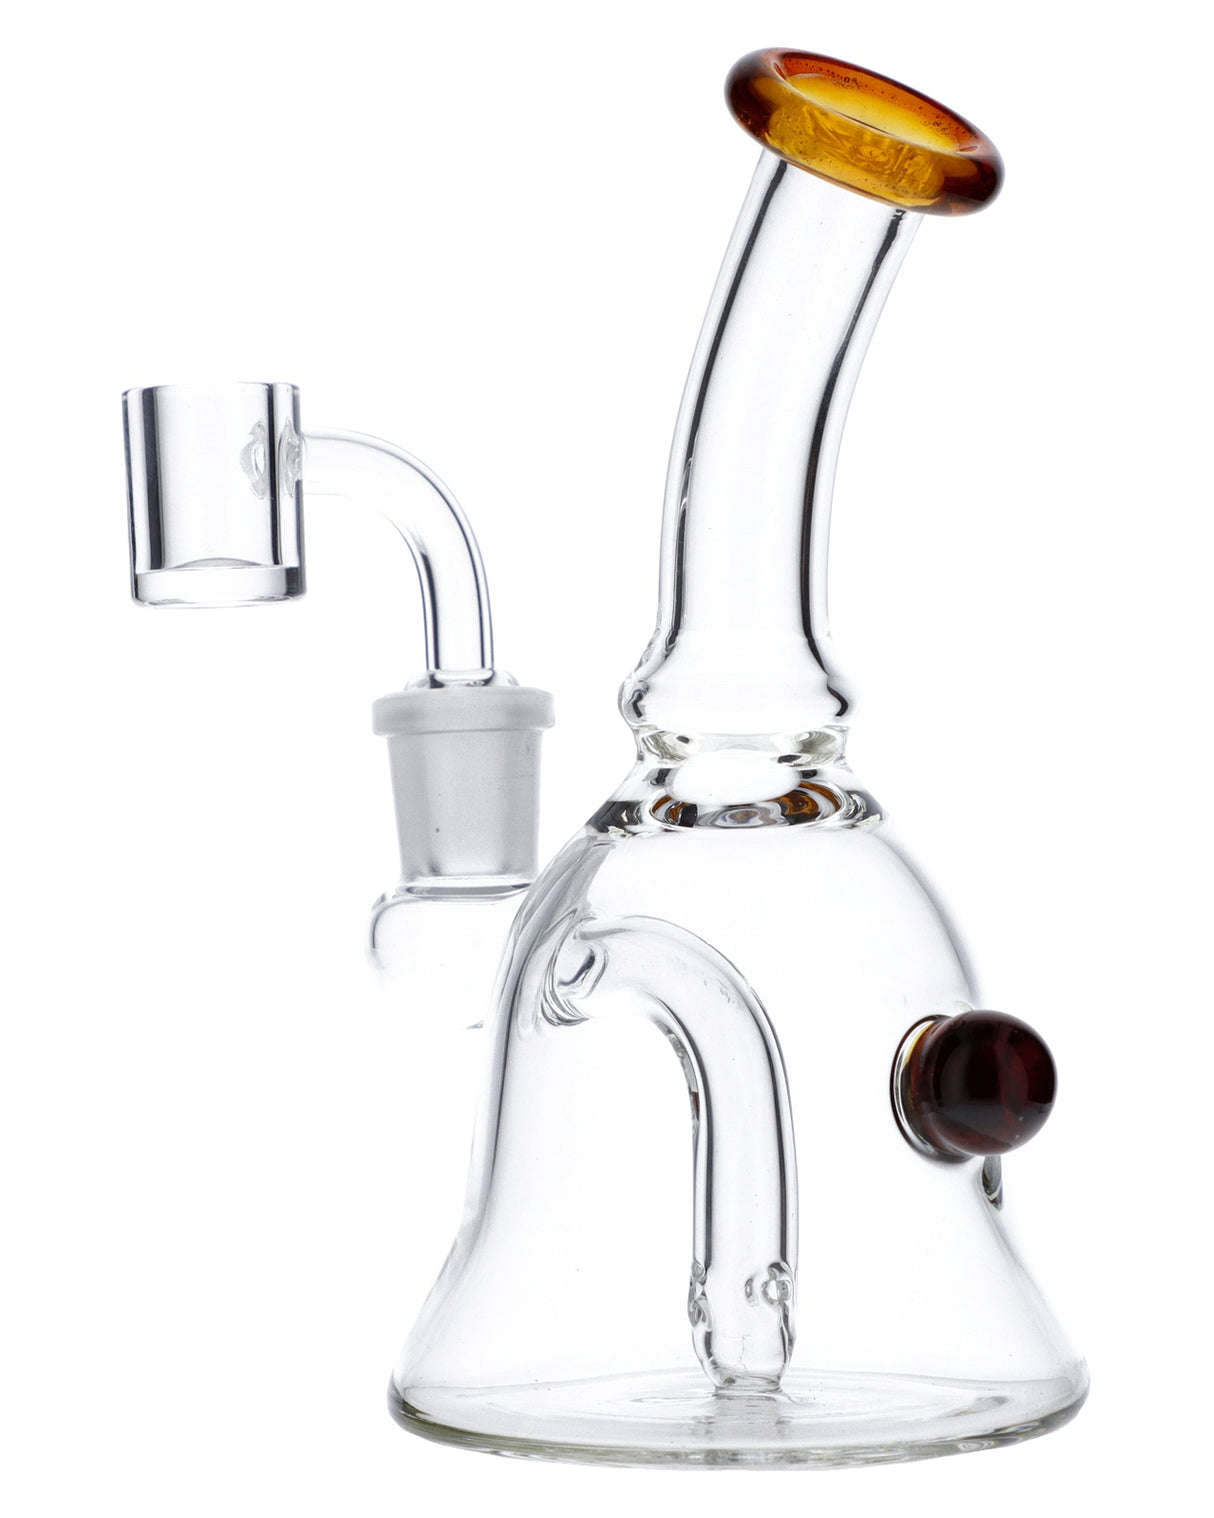 Quartz Banger Dab Rig by Valiant Distribution, Beaker Design with Glass on Glass Joint